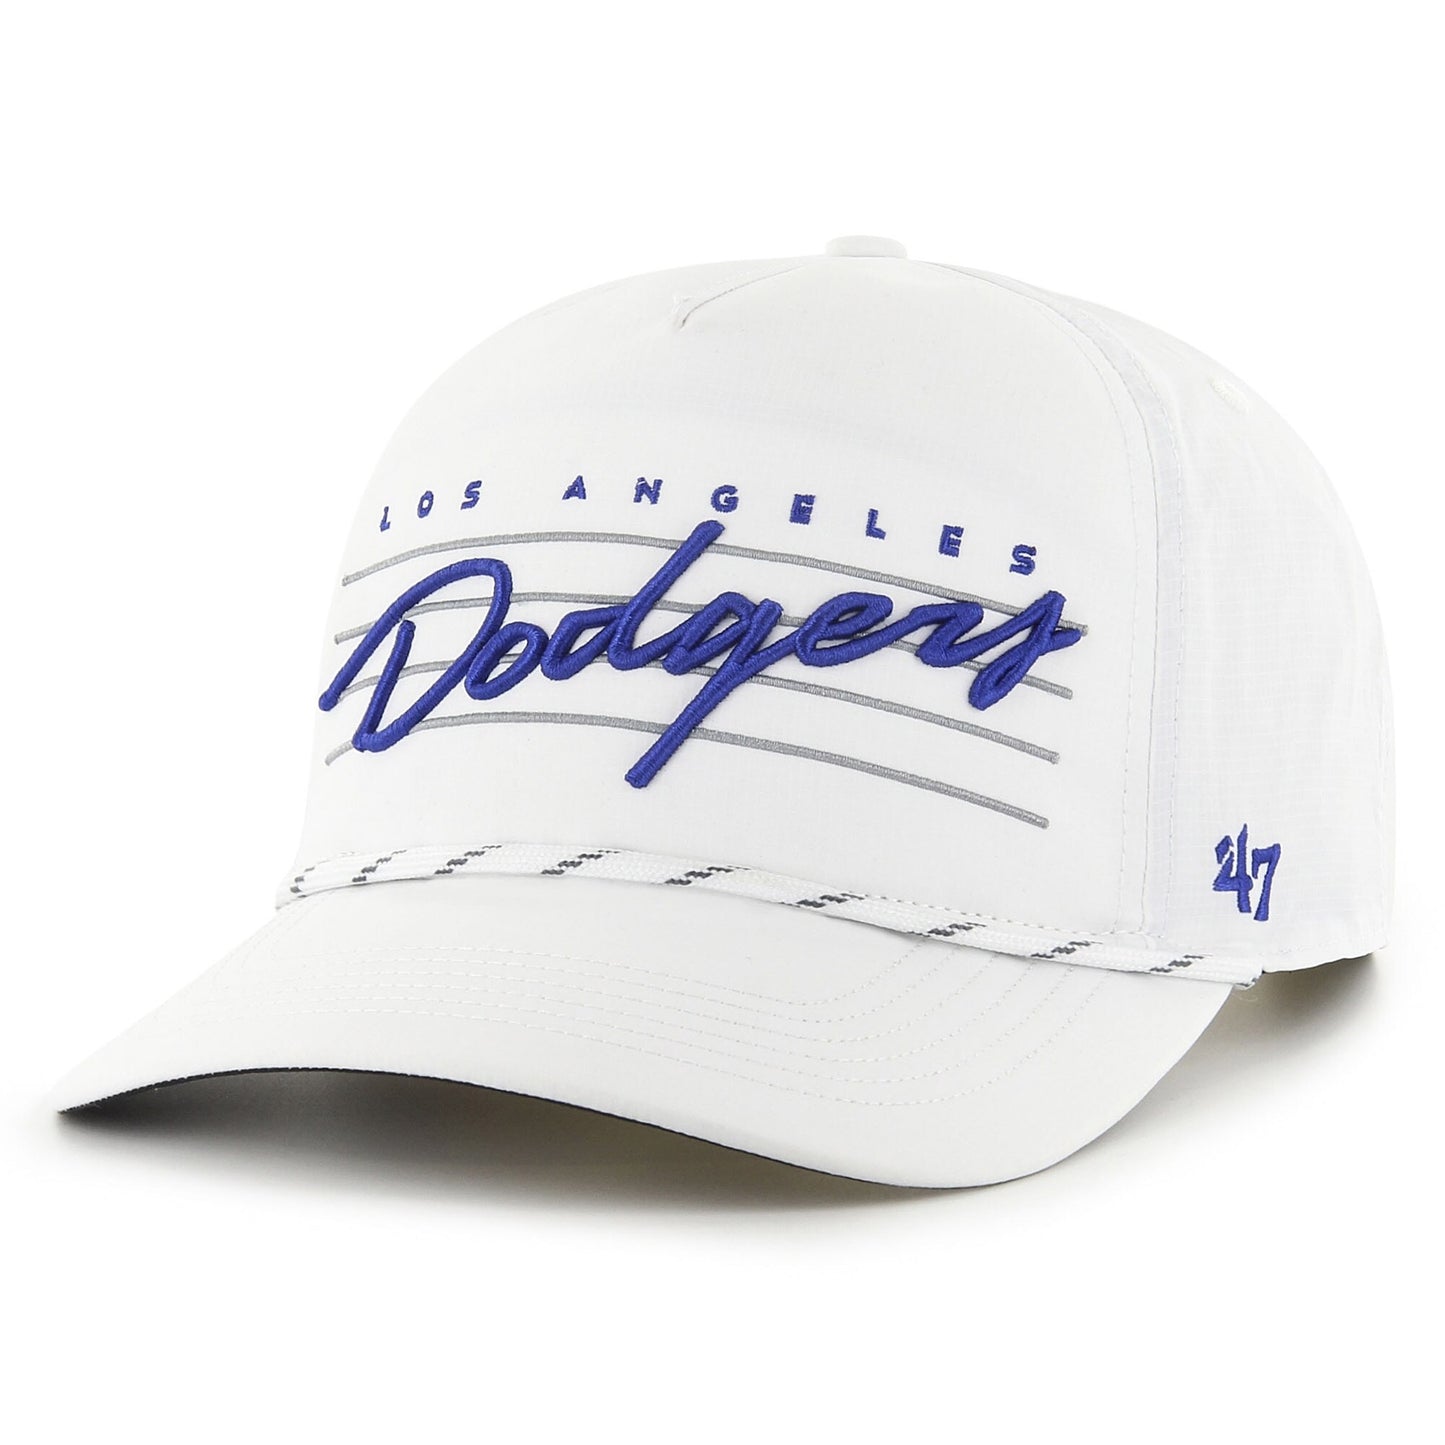 Los Angeles Dodgers '47 Downburst Hitch Snapback Hat - White